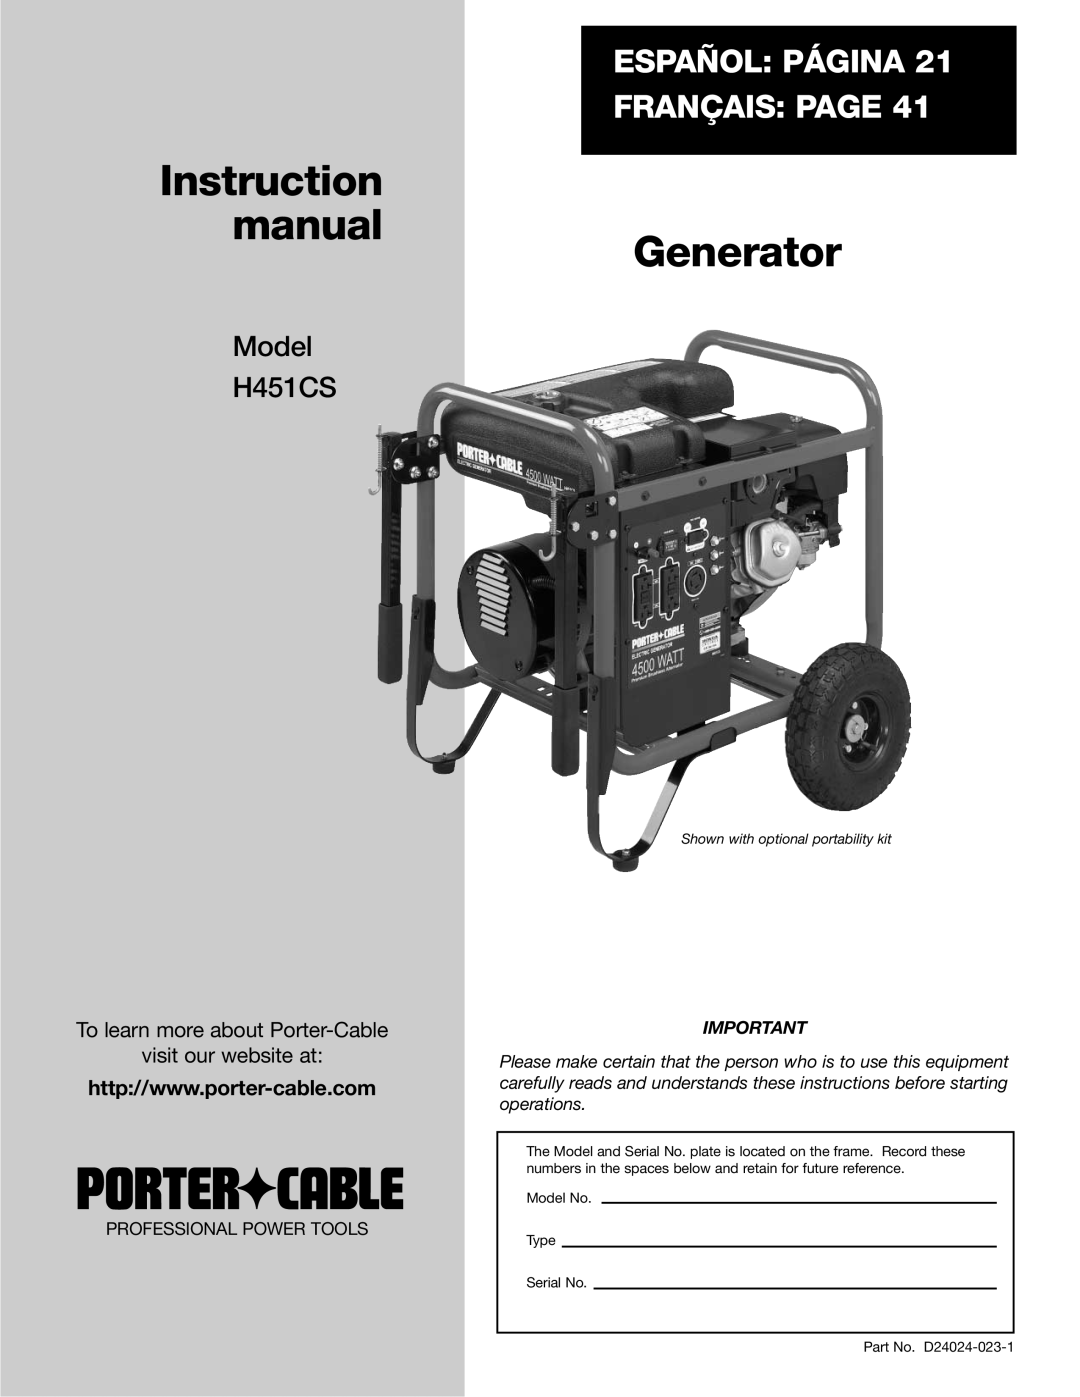 Porter-Cable instruction manual Instruction manual, Generator, Español Página Français Page, Model H451CS 